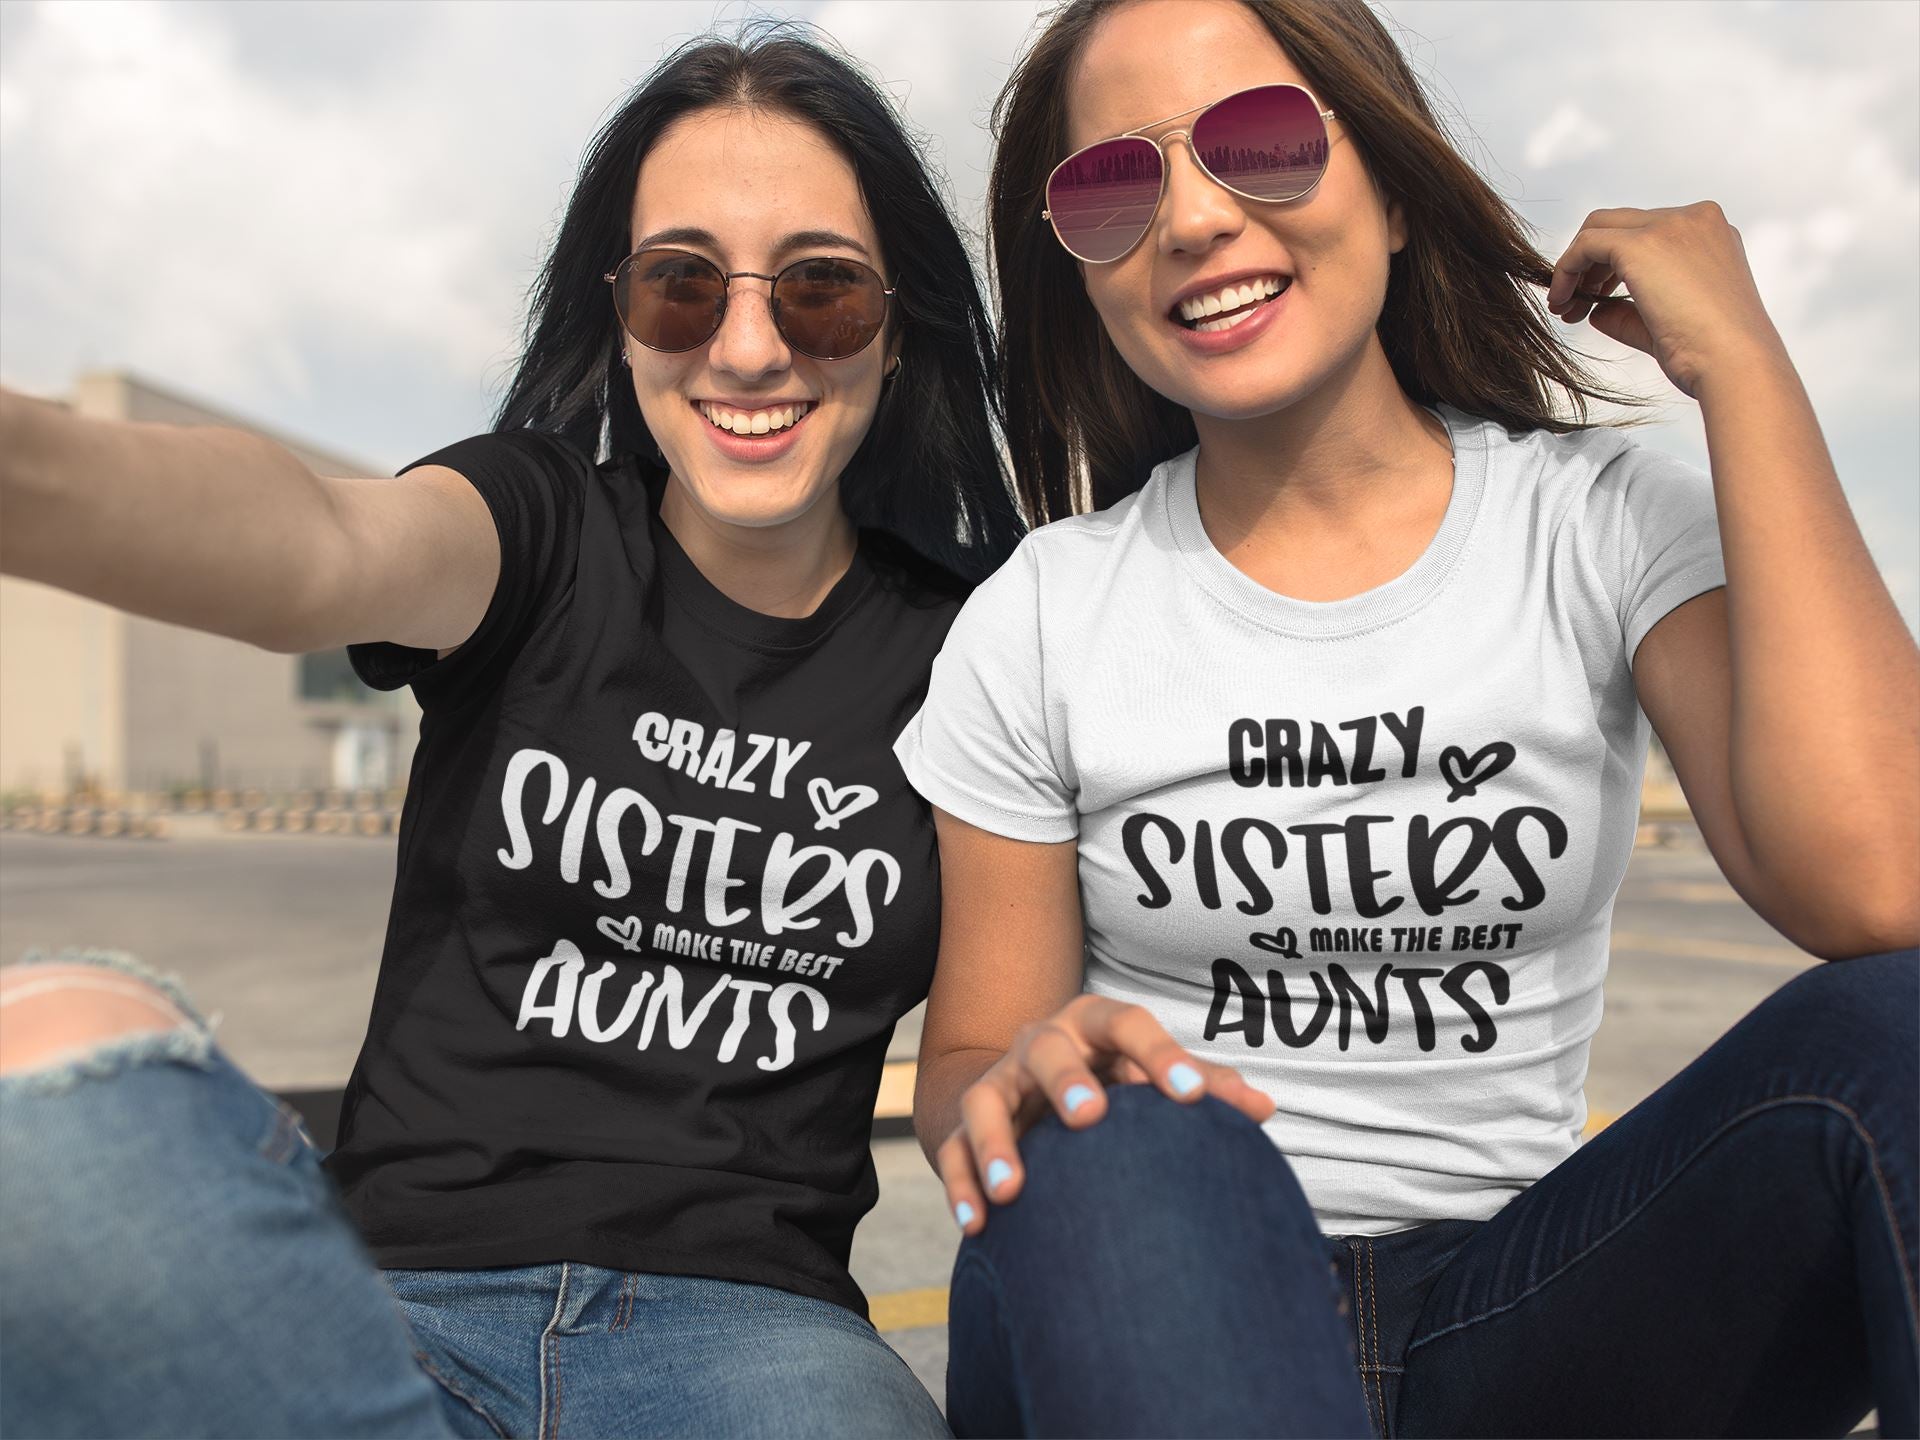 Crazy sisters make the best Aunts T-shirt